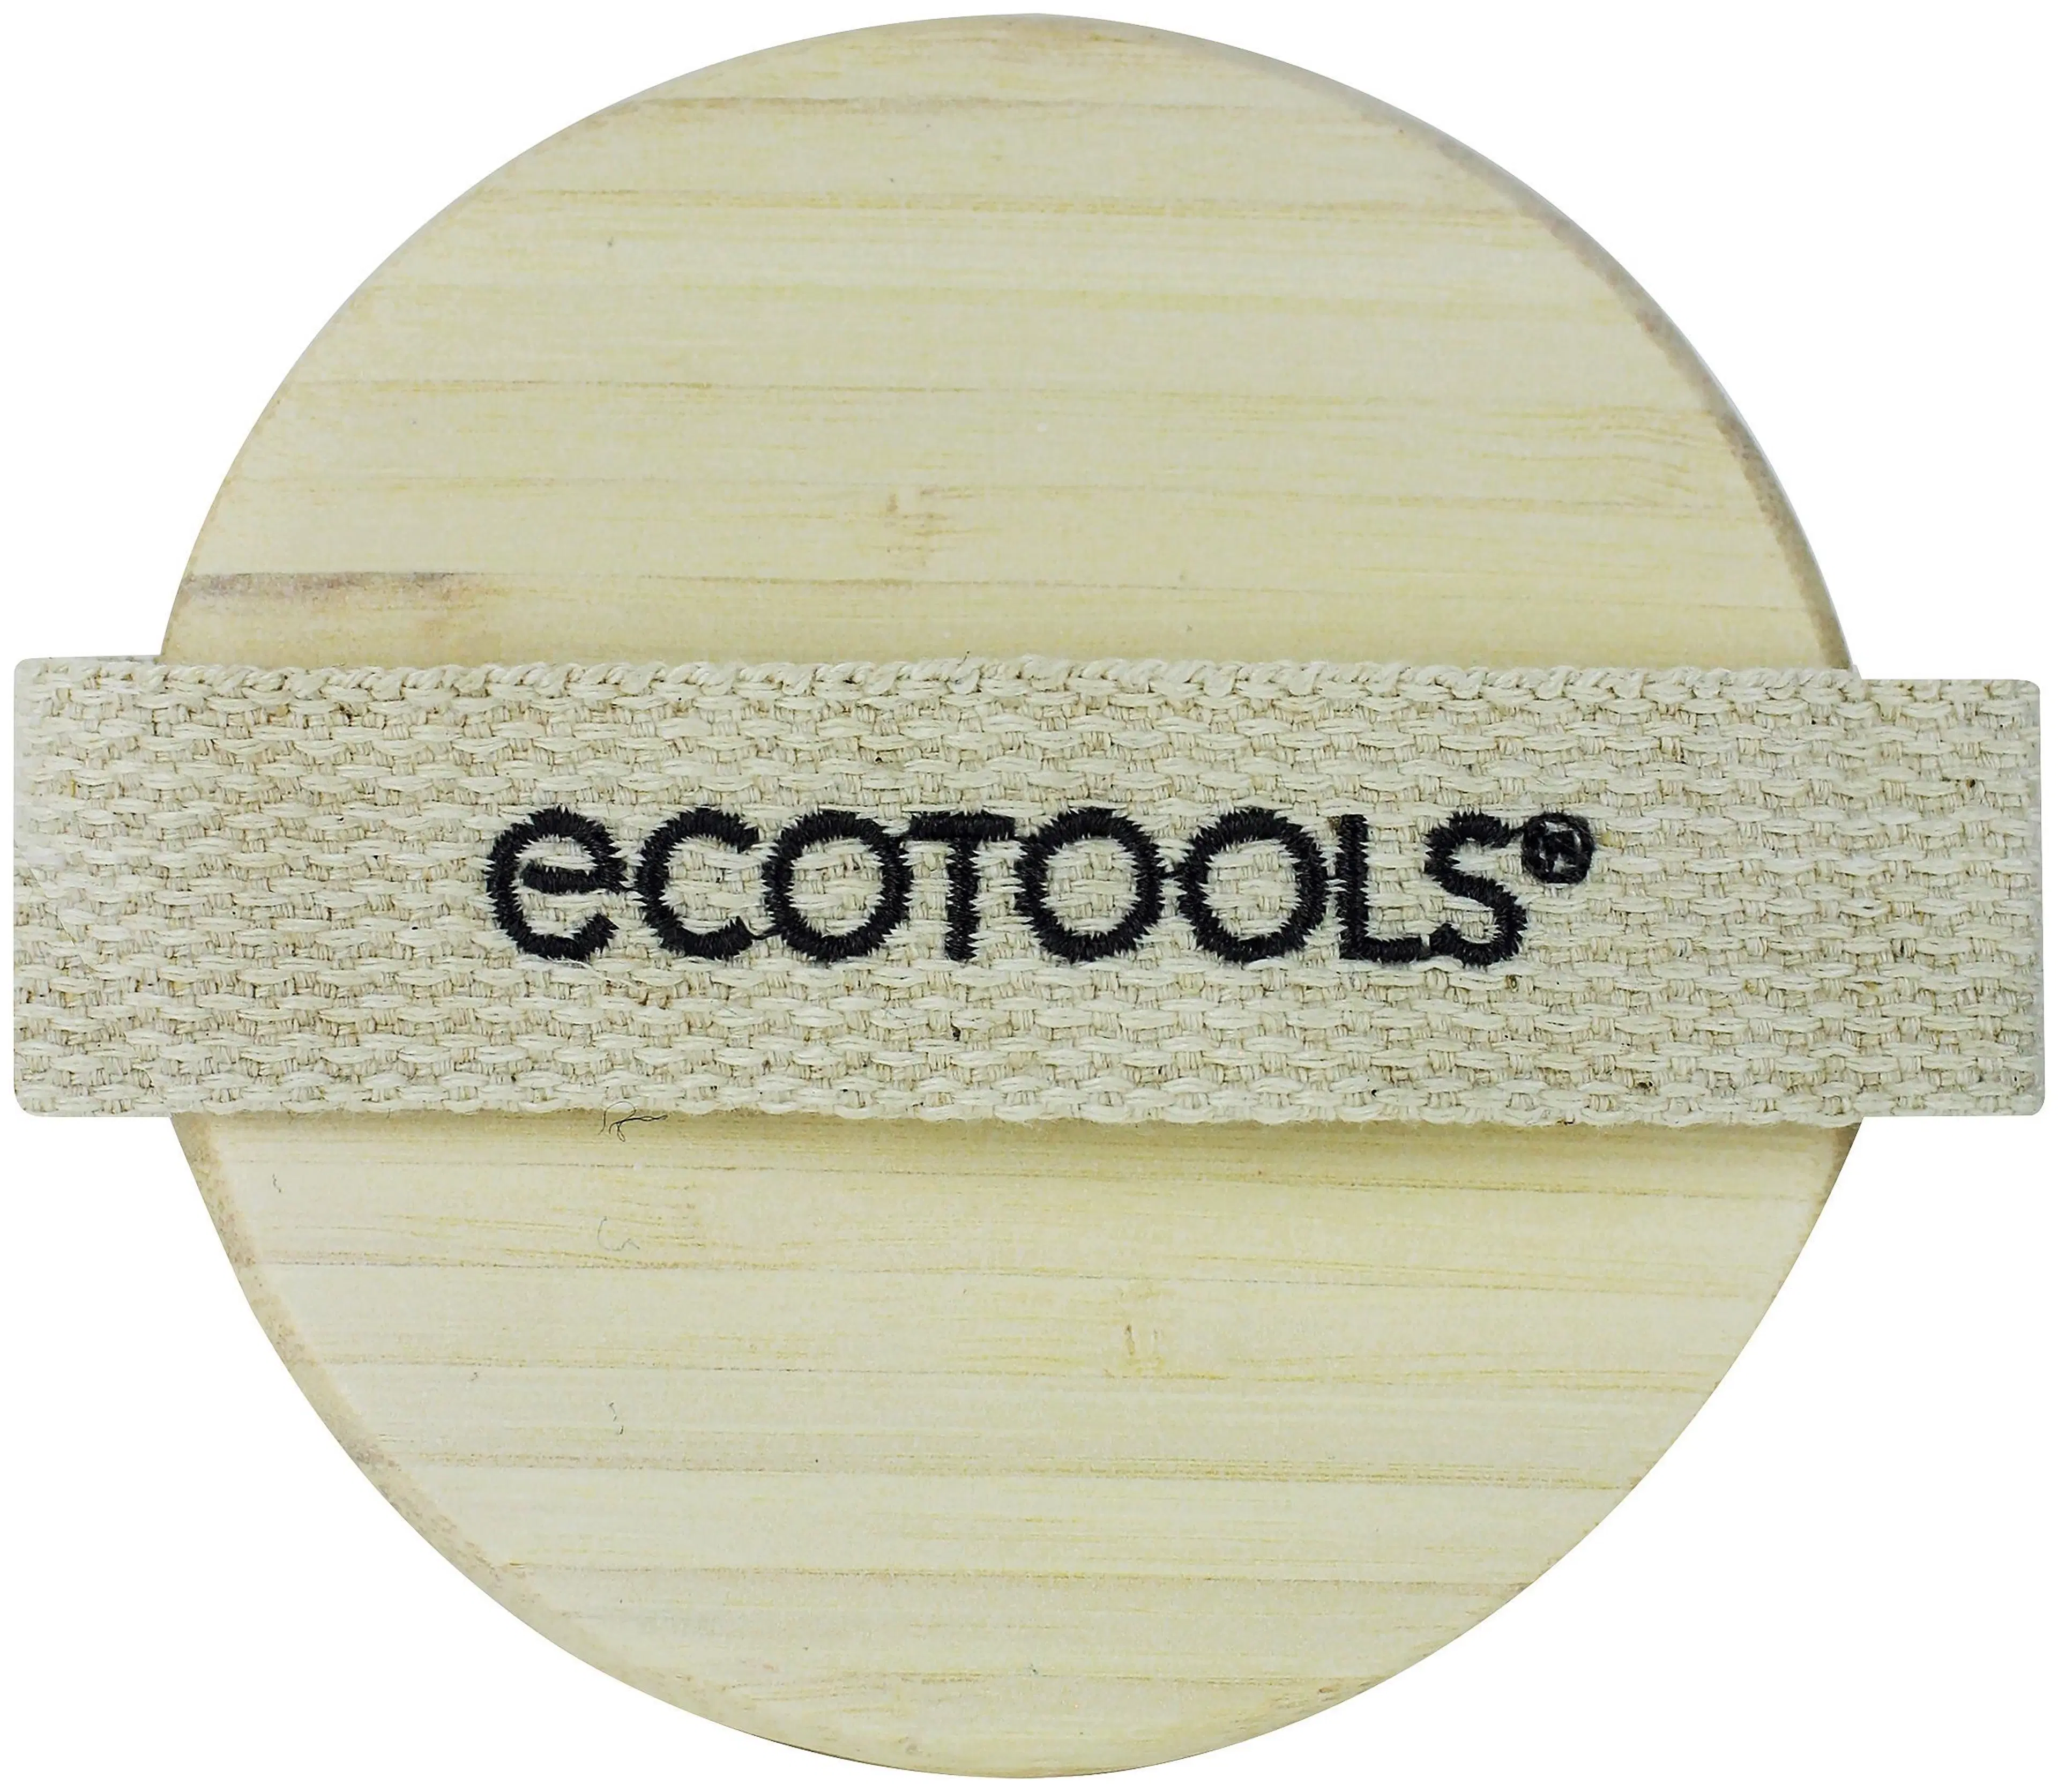 Ecotools Dry Brush Kuivaharja